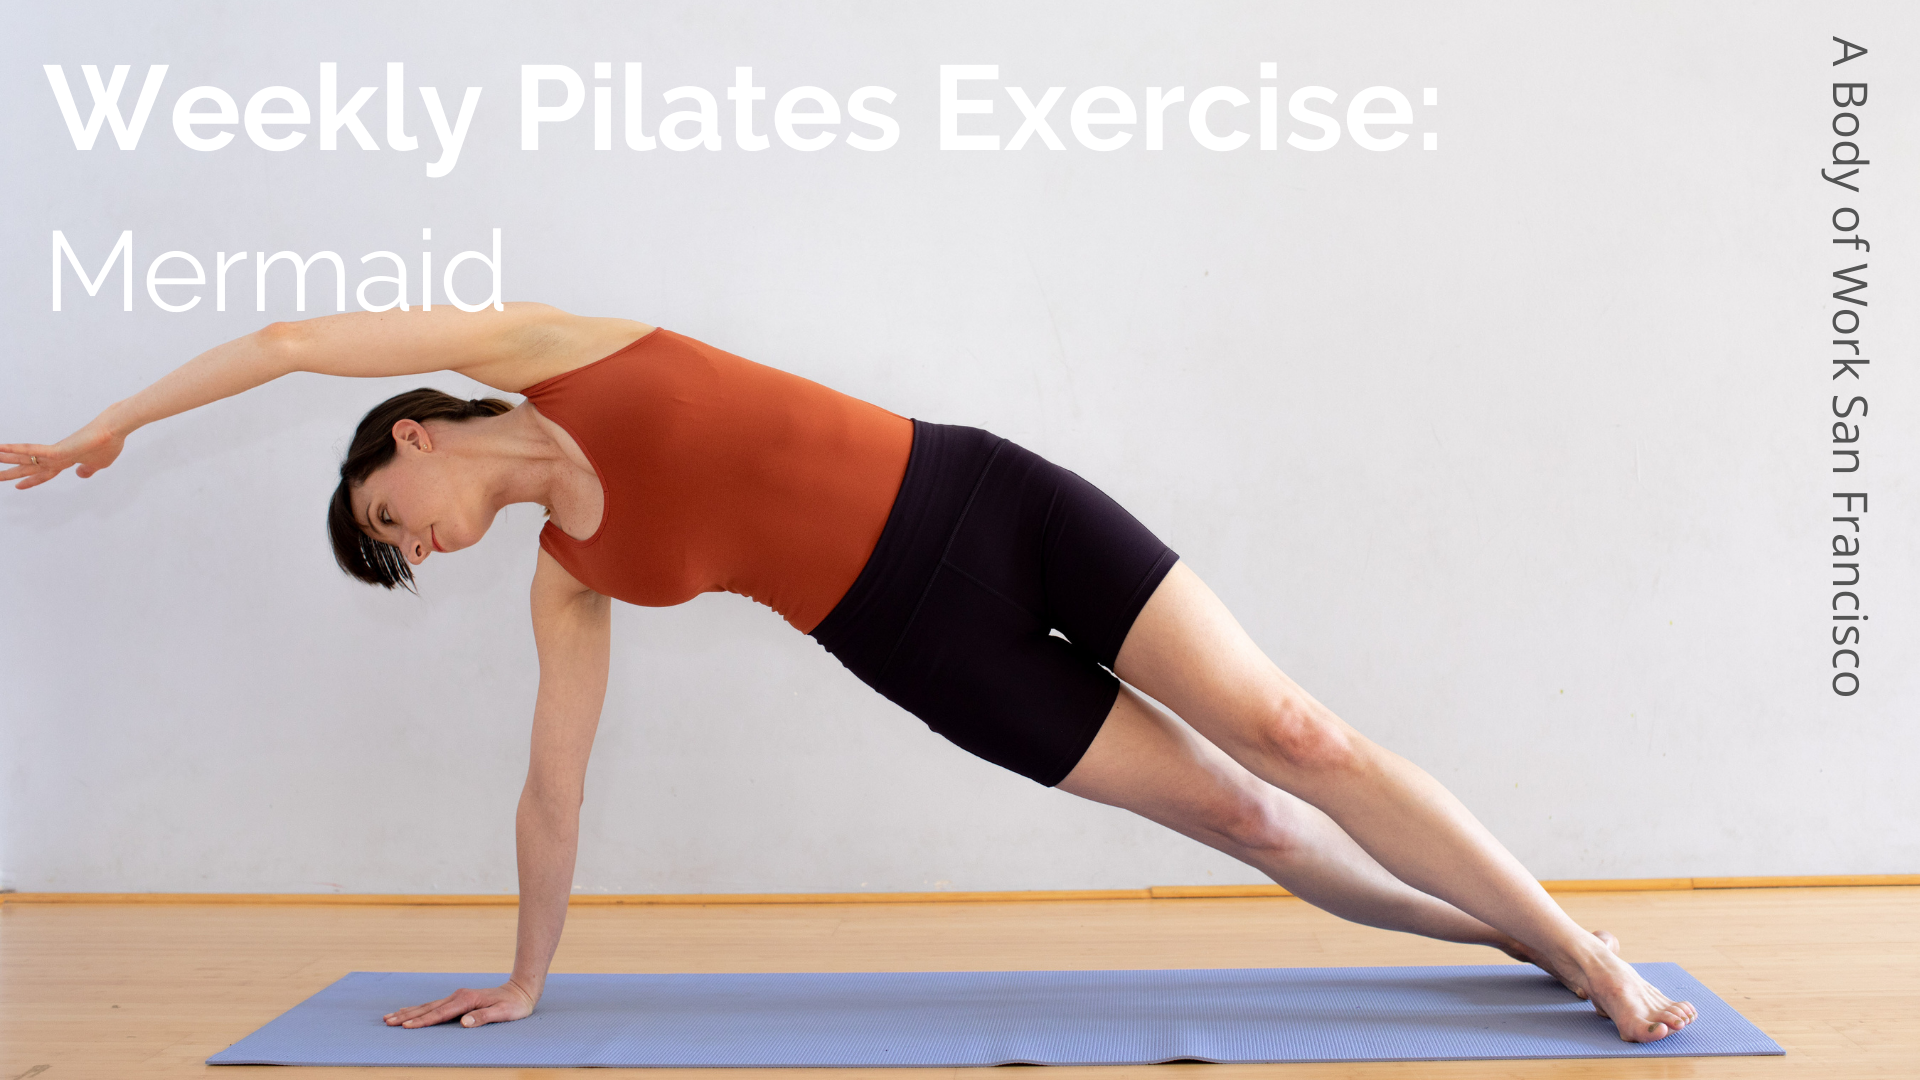 ITT Pilates Exercise: Mermaid — A Body of Work